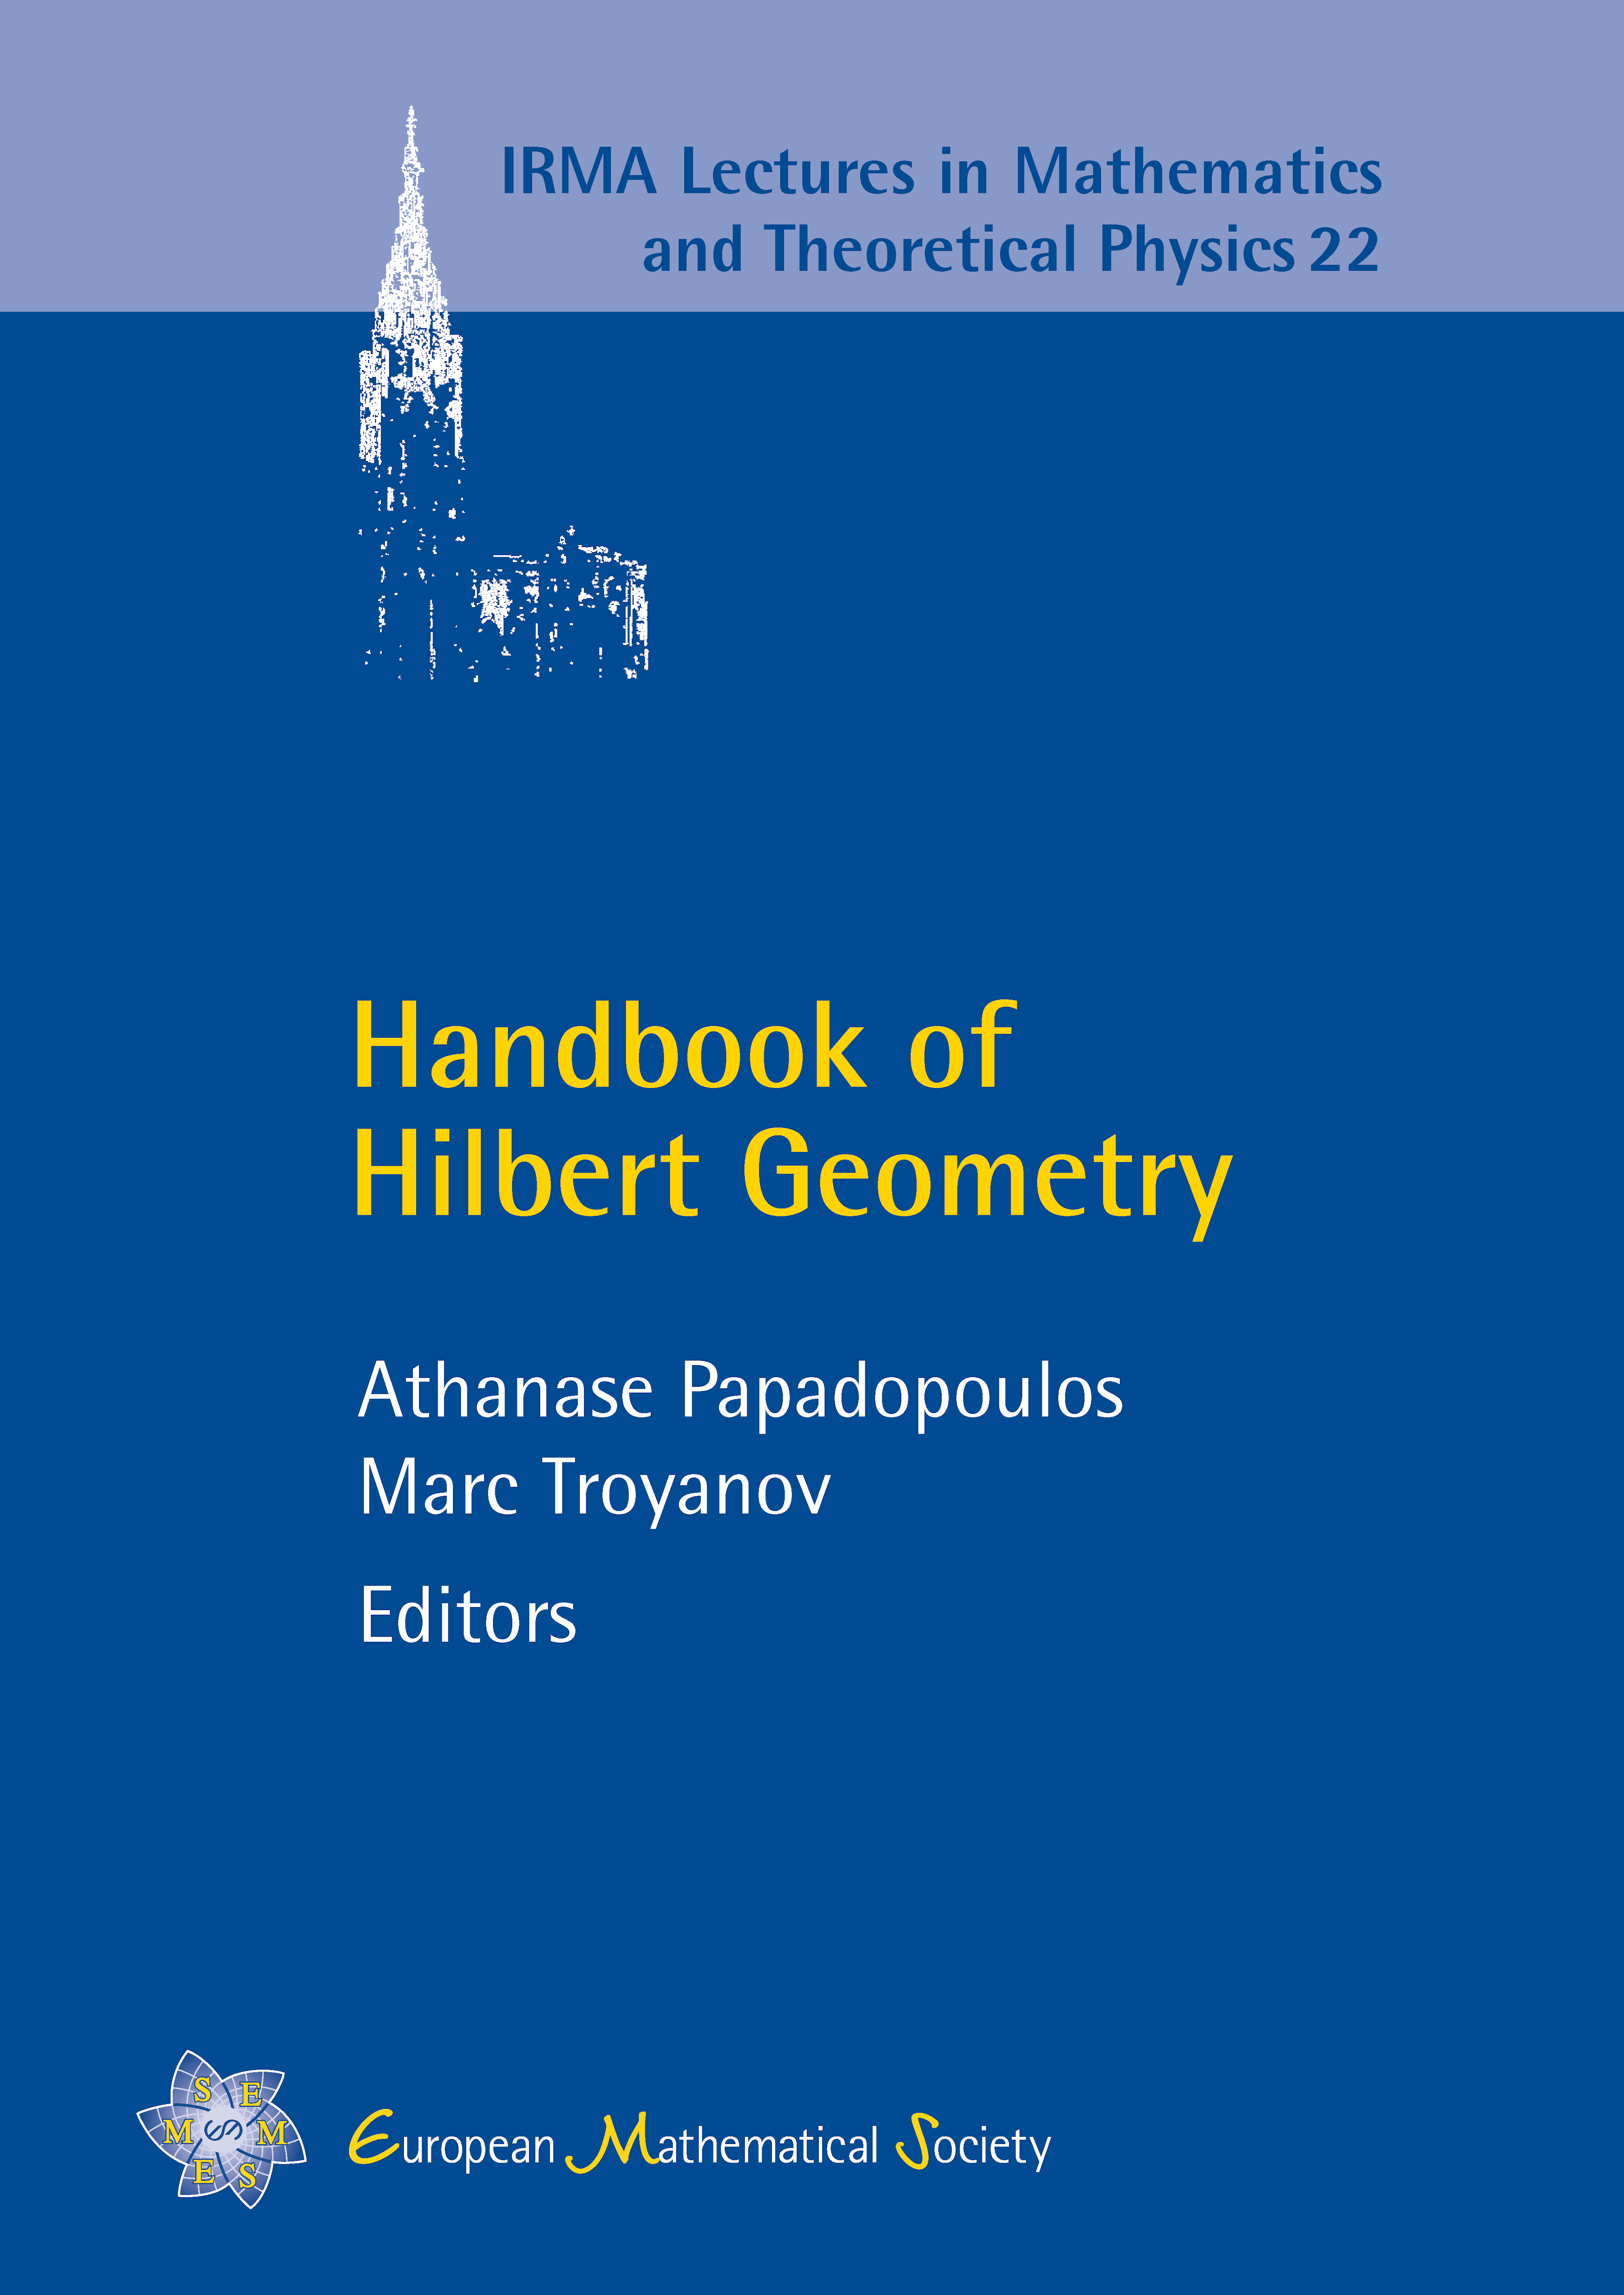 Around groups in Hilbert geometry cover